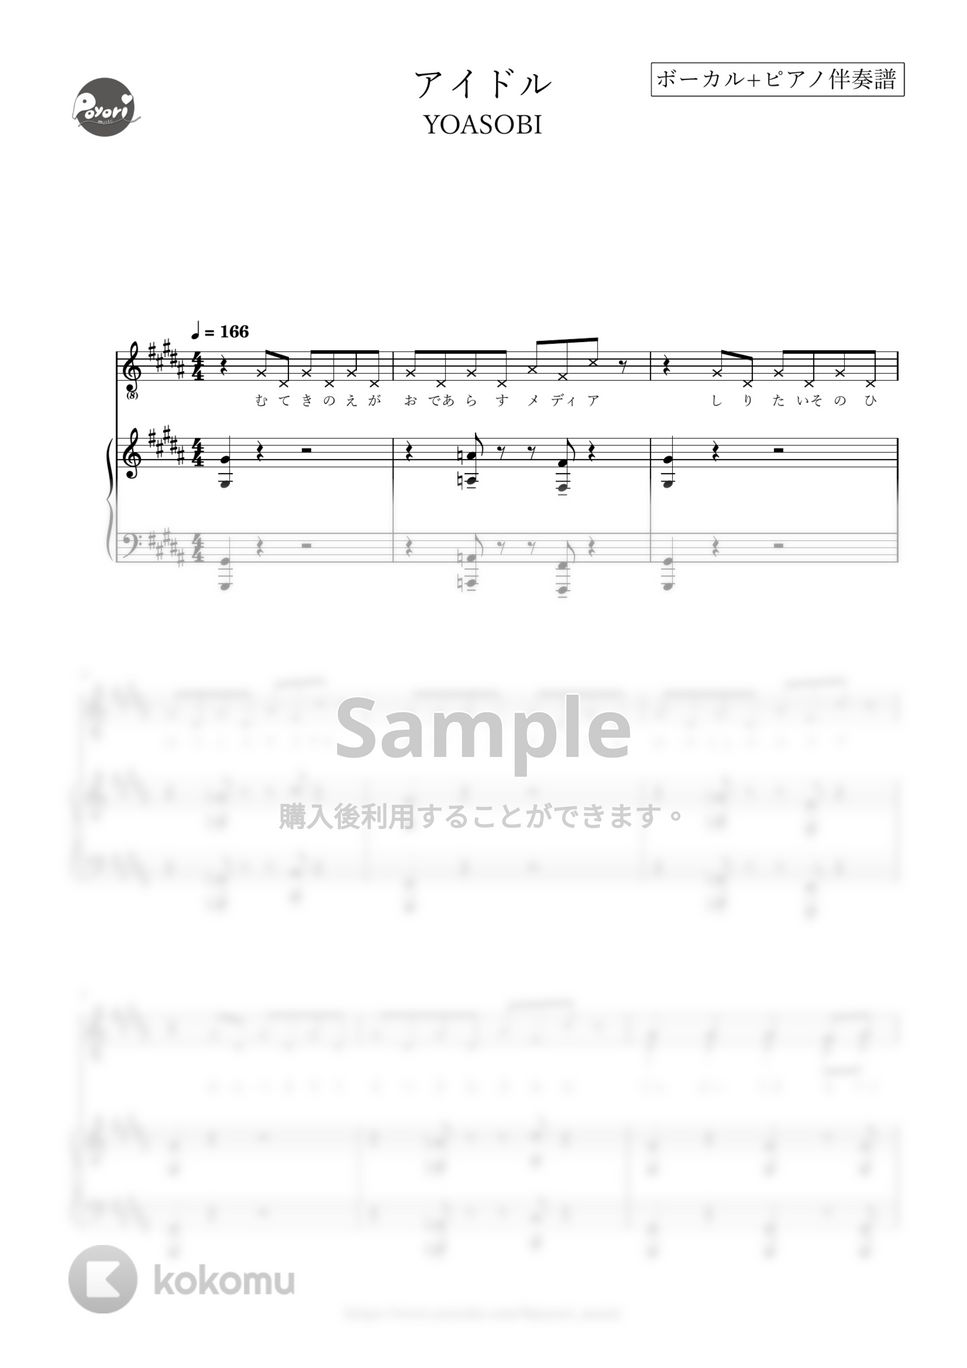 YOASOBI - アイドル (メロディ/歌詞/ピアノ伴奏) by poyori